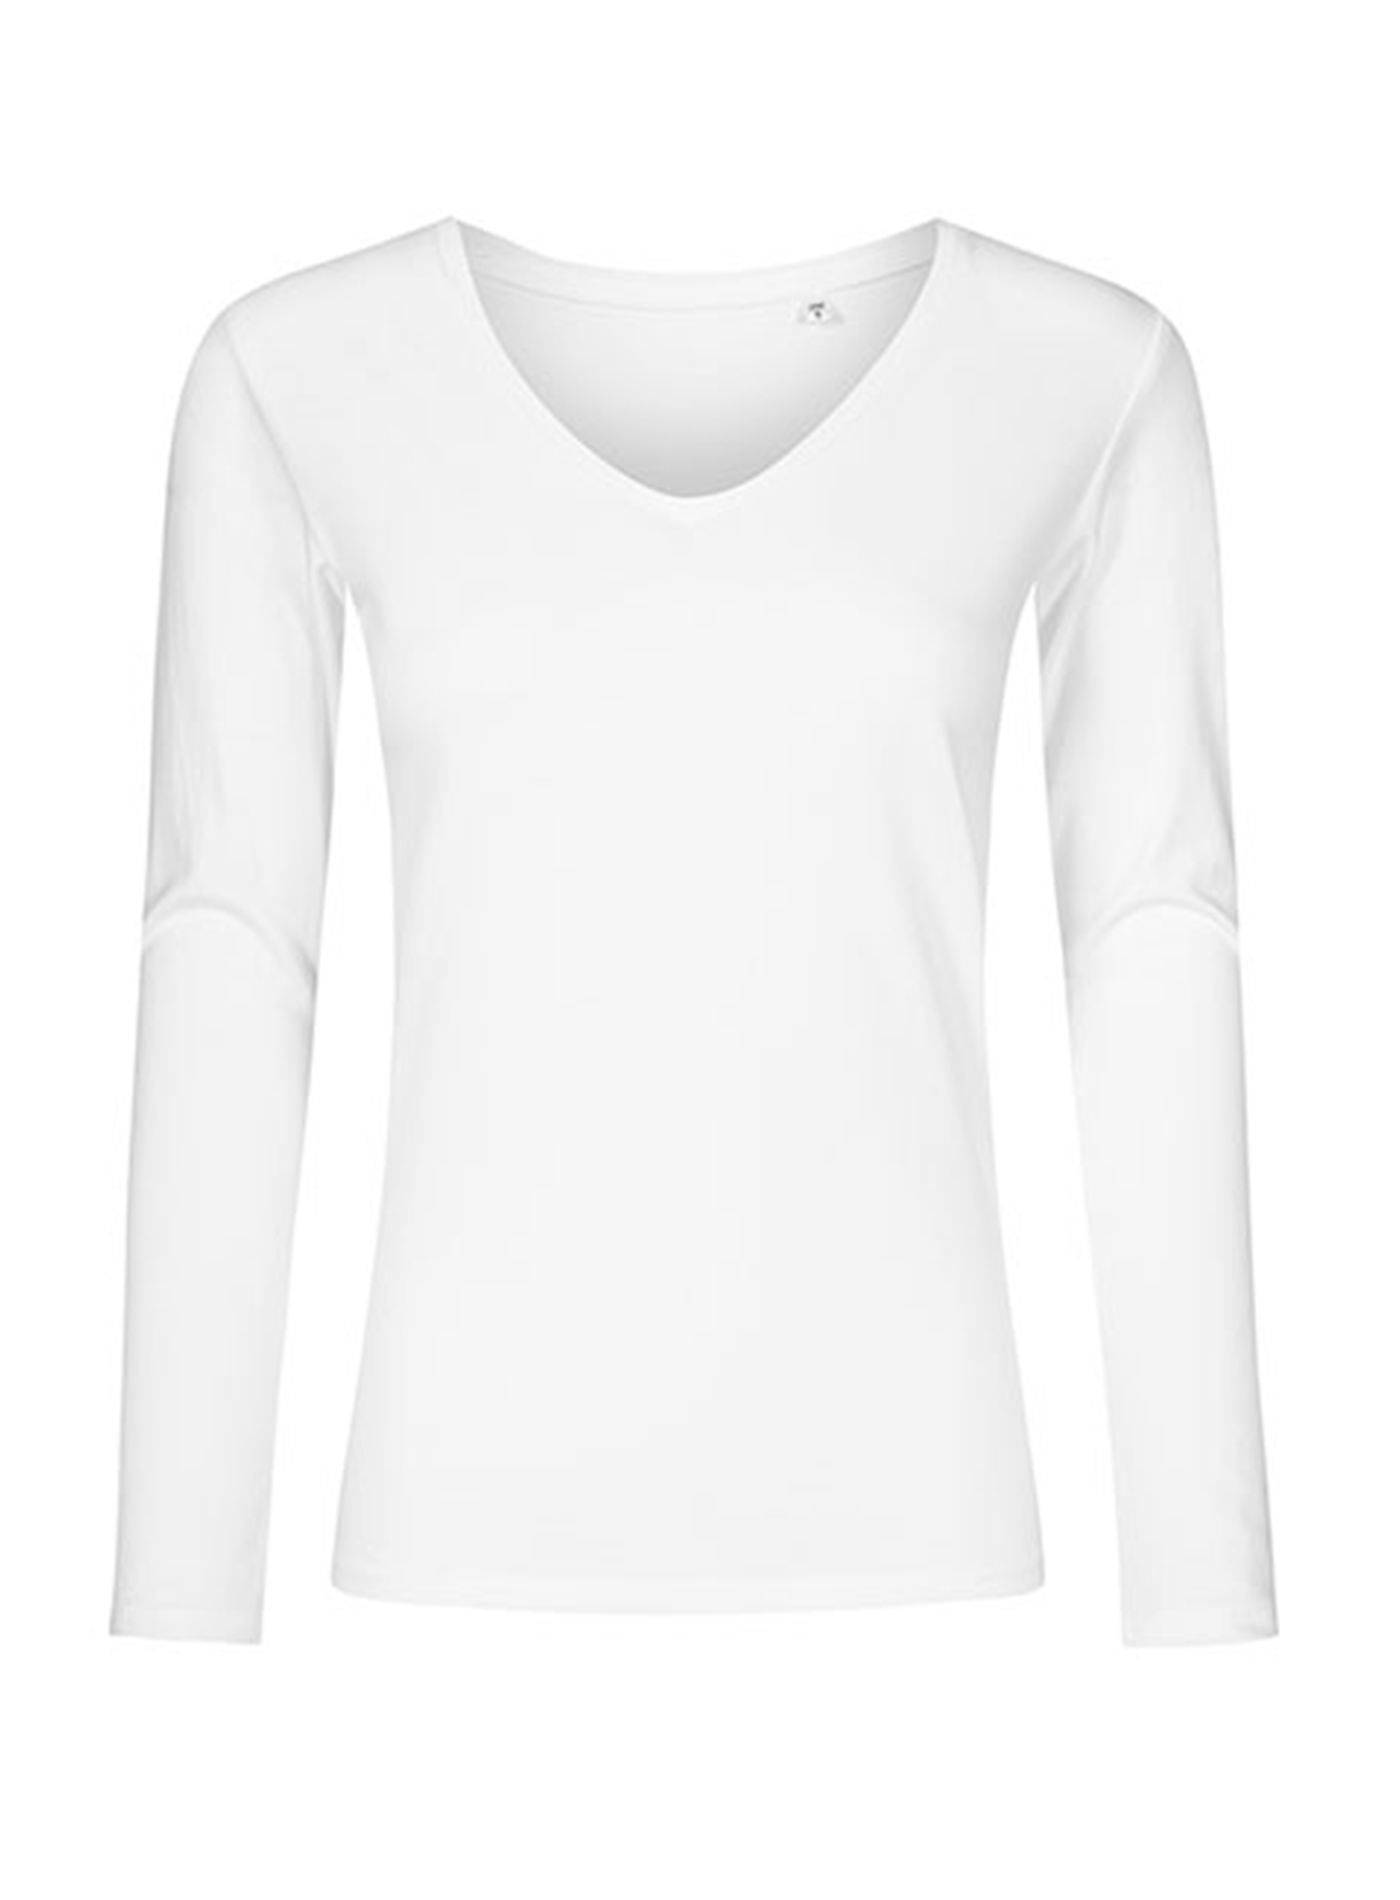 Dámské tričko s dlouhým rukávem a výstřihem do V Promodoro - Bílá S